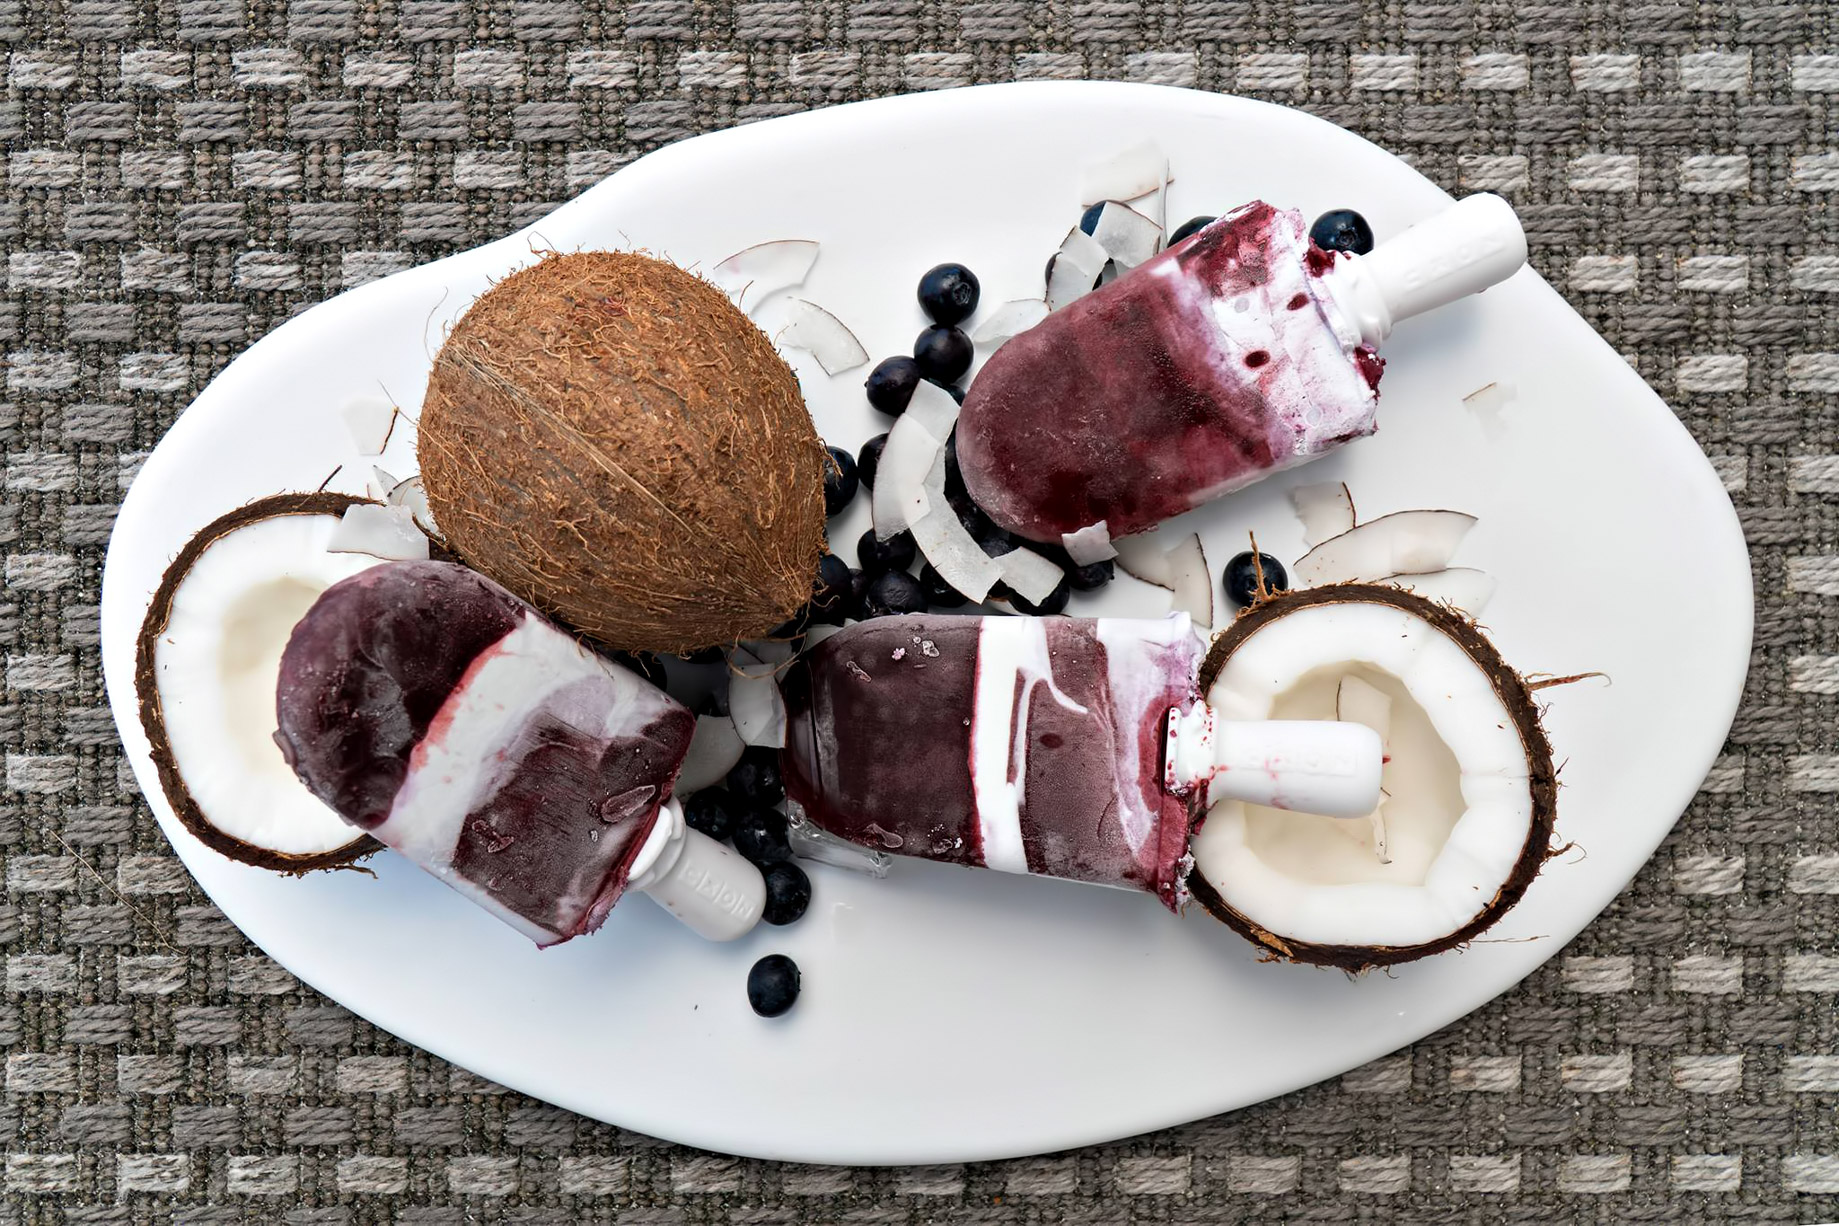 Cheval Blanc Randheli Resort – Noonu Atoll, Maldives – Culinary Dining Arts Coconut Dessert